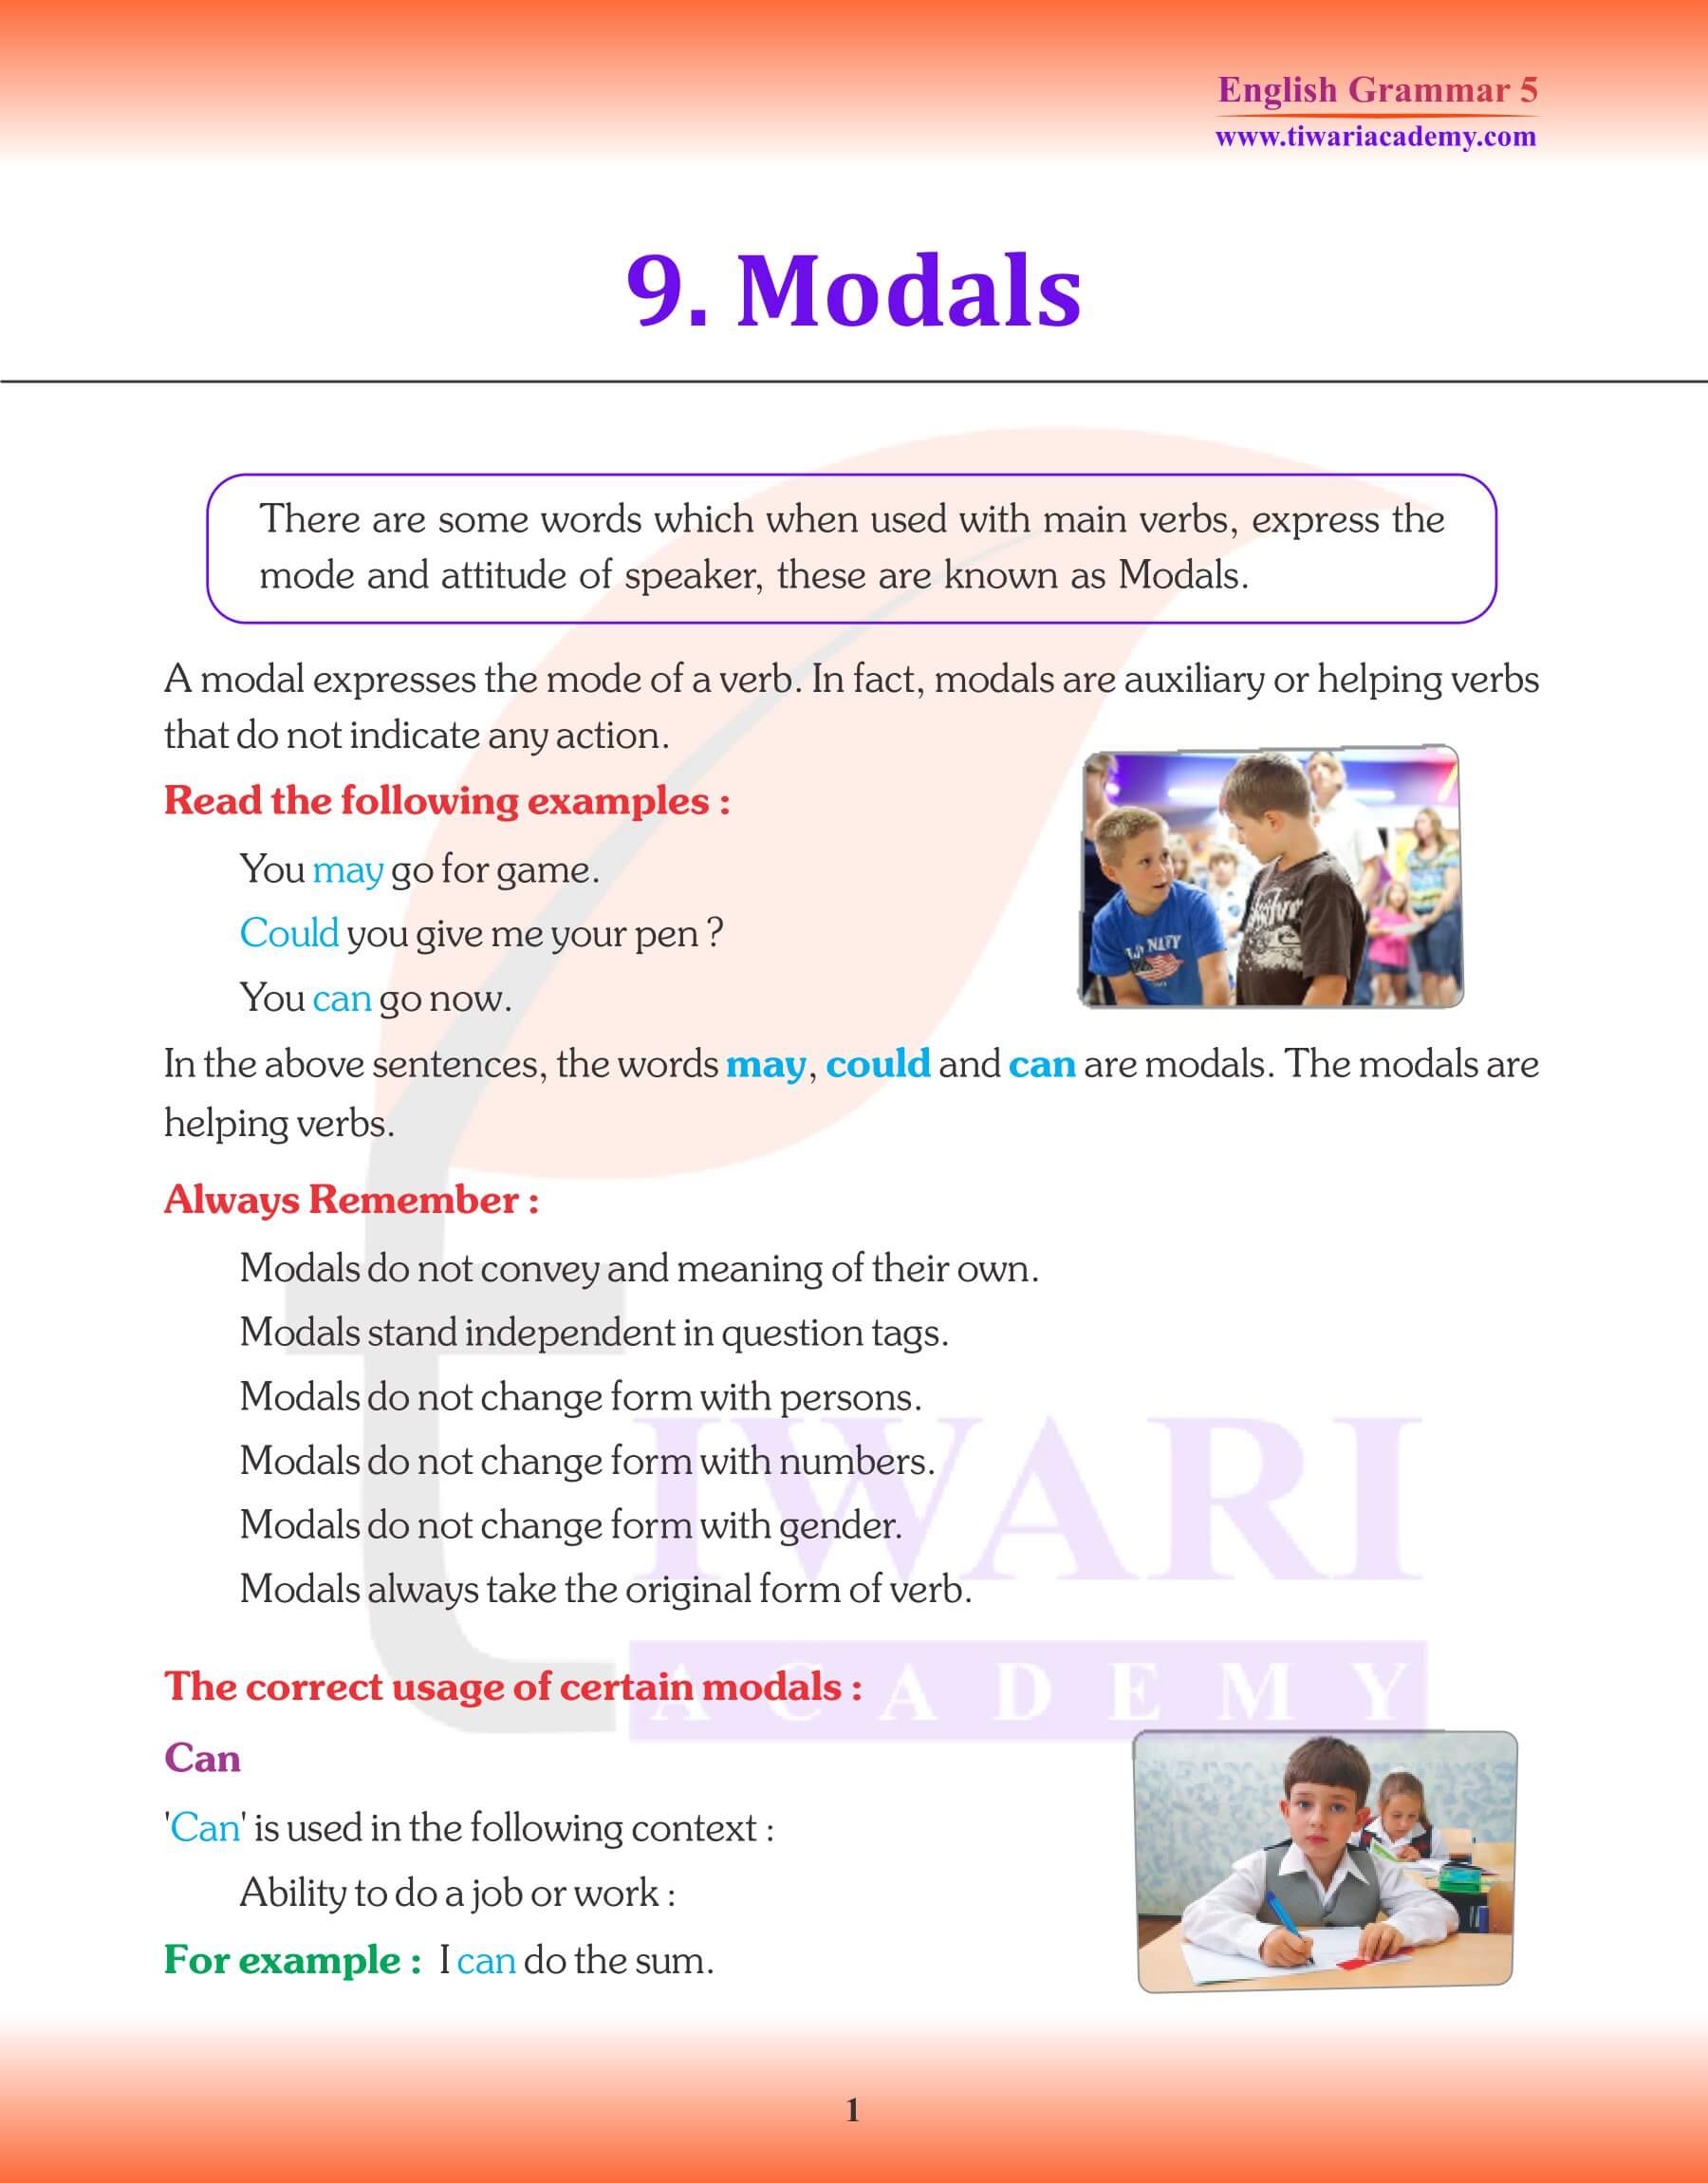 Class 5 English Grammar Modals Revision Book